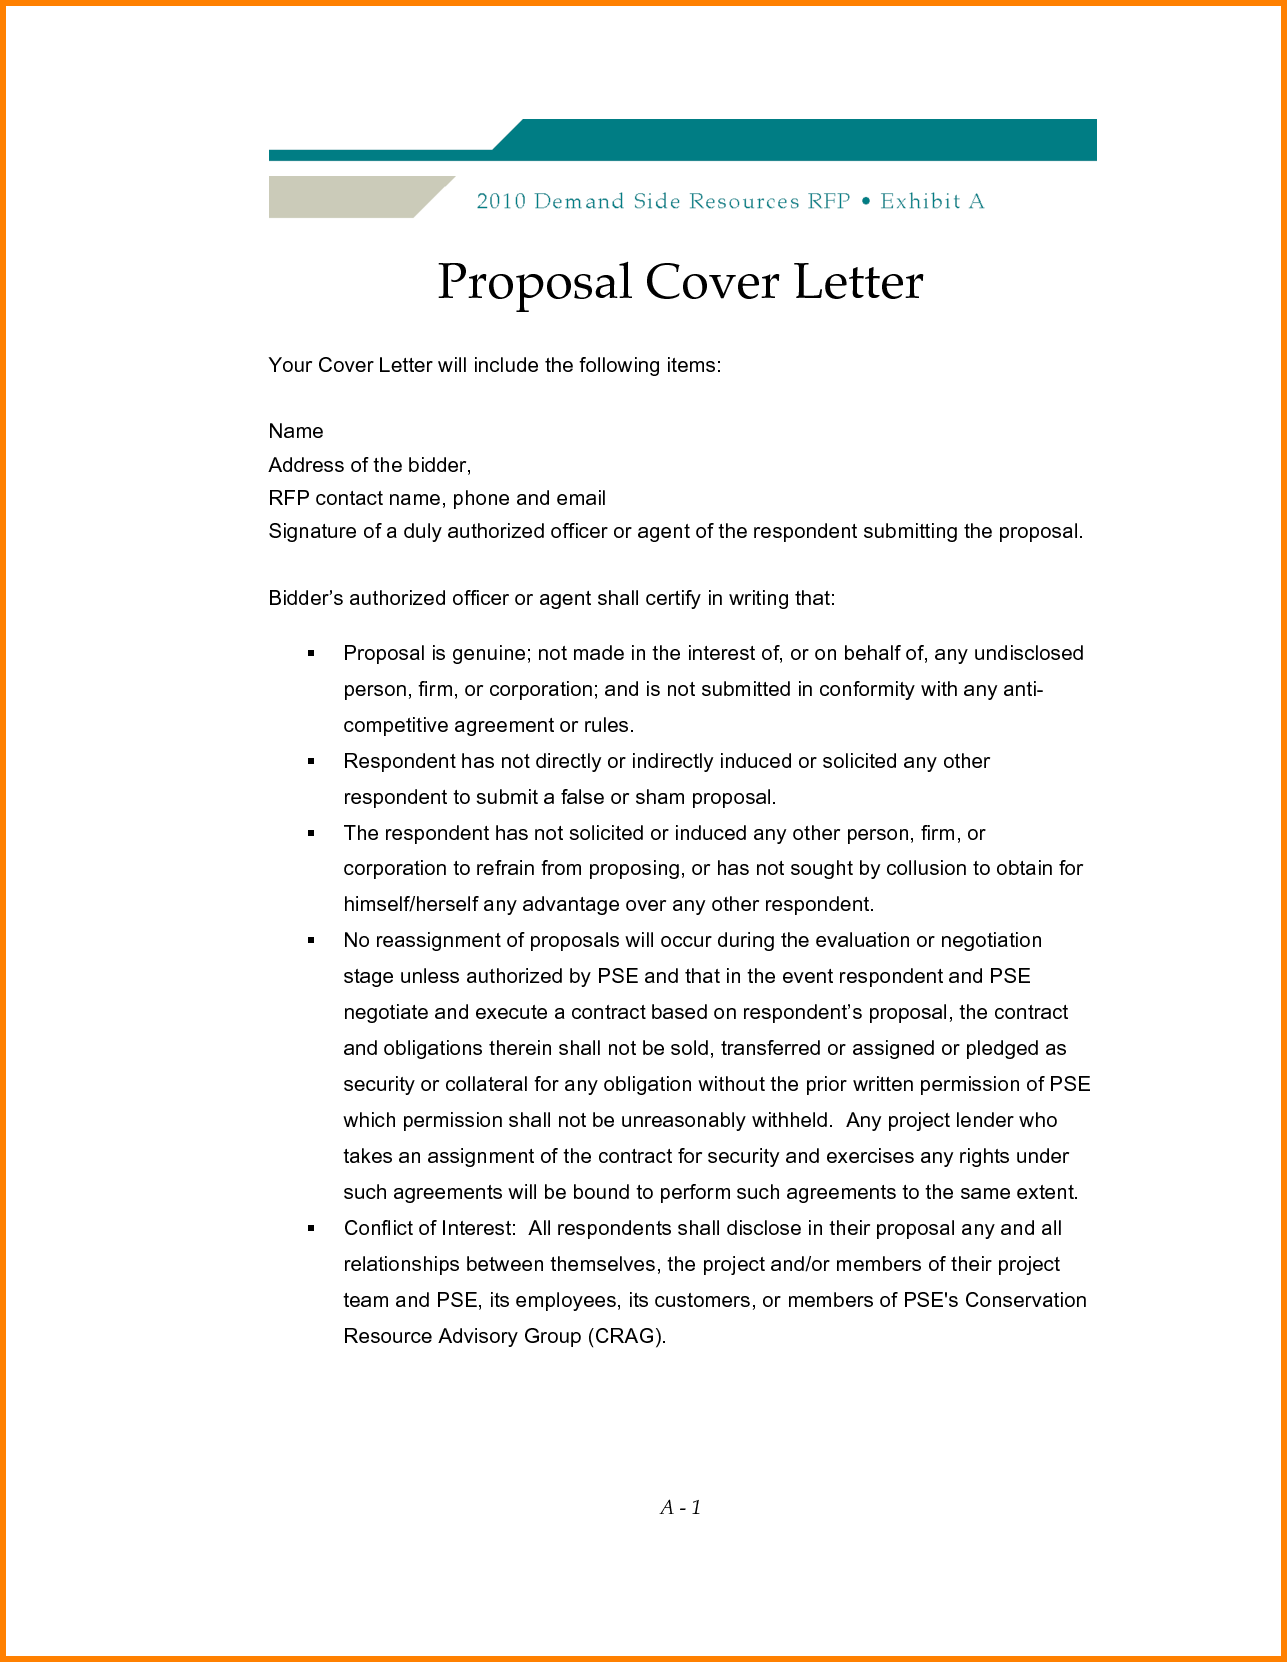 Sample Proposal Cover Letter 1 Business techtrontechnologies.com